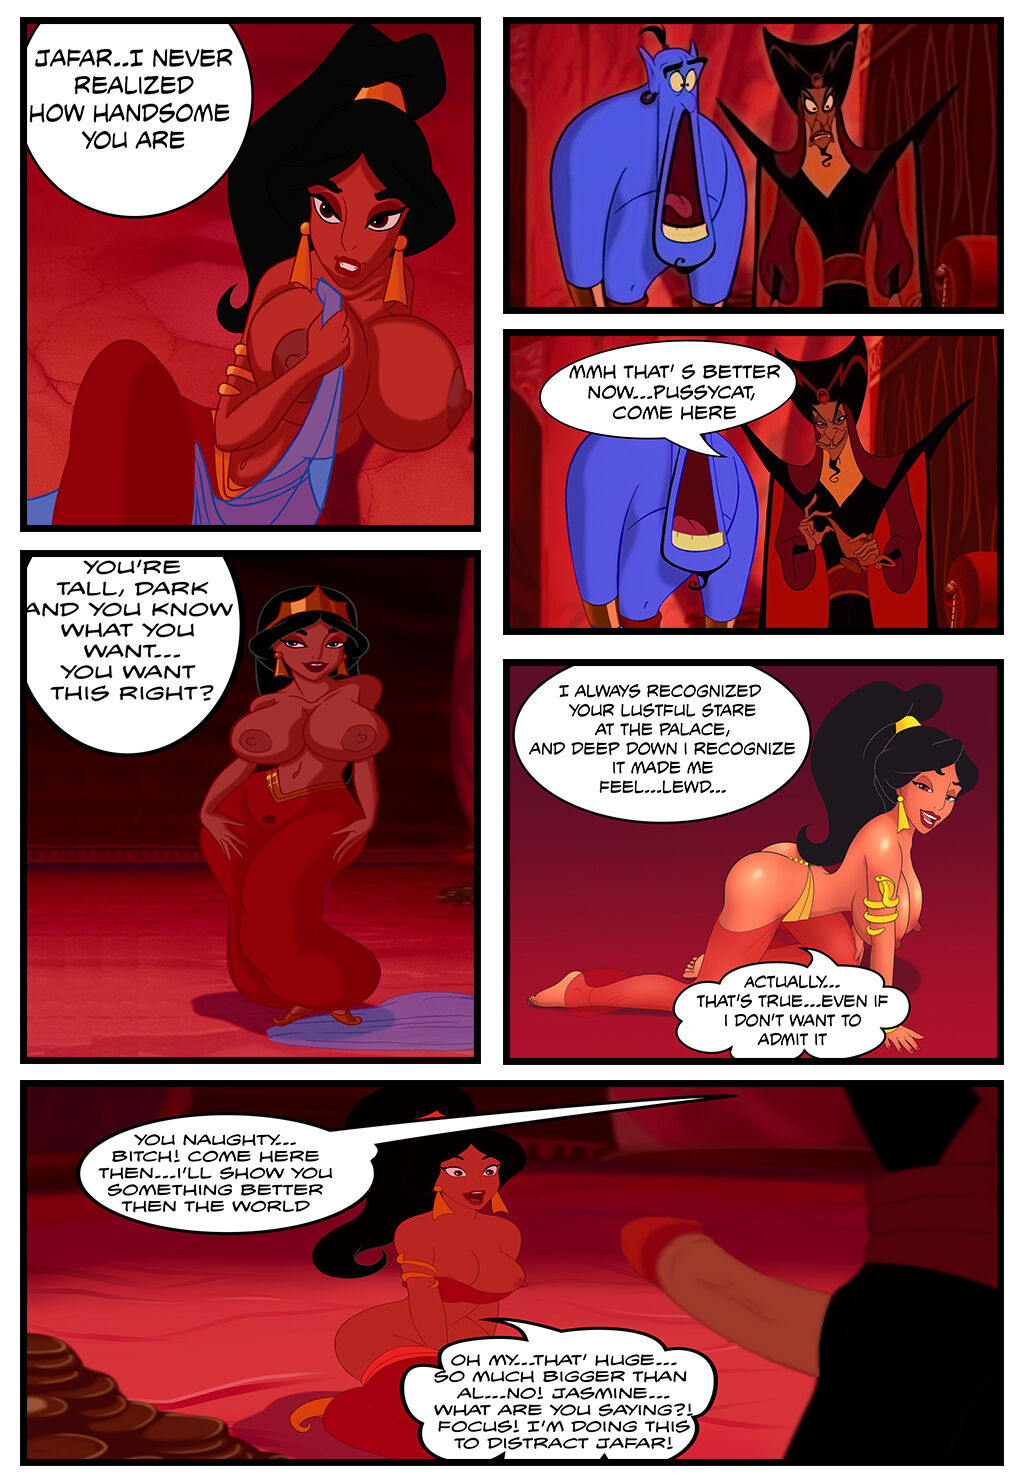 Aladdin Big Boobs - Jasmine wants Jafar (Aladdin) - Porn Cartoon Comics